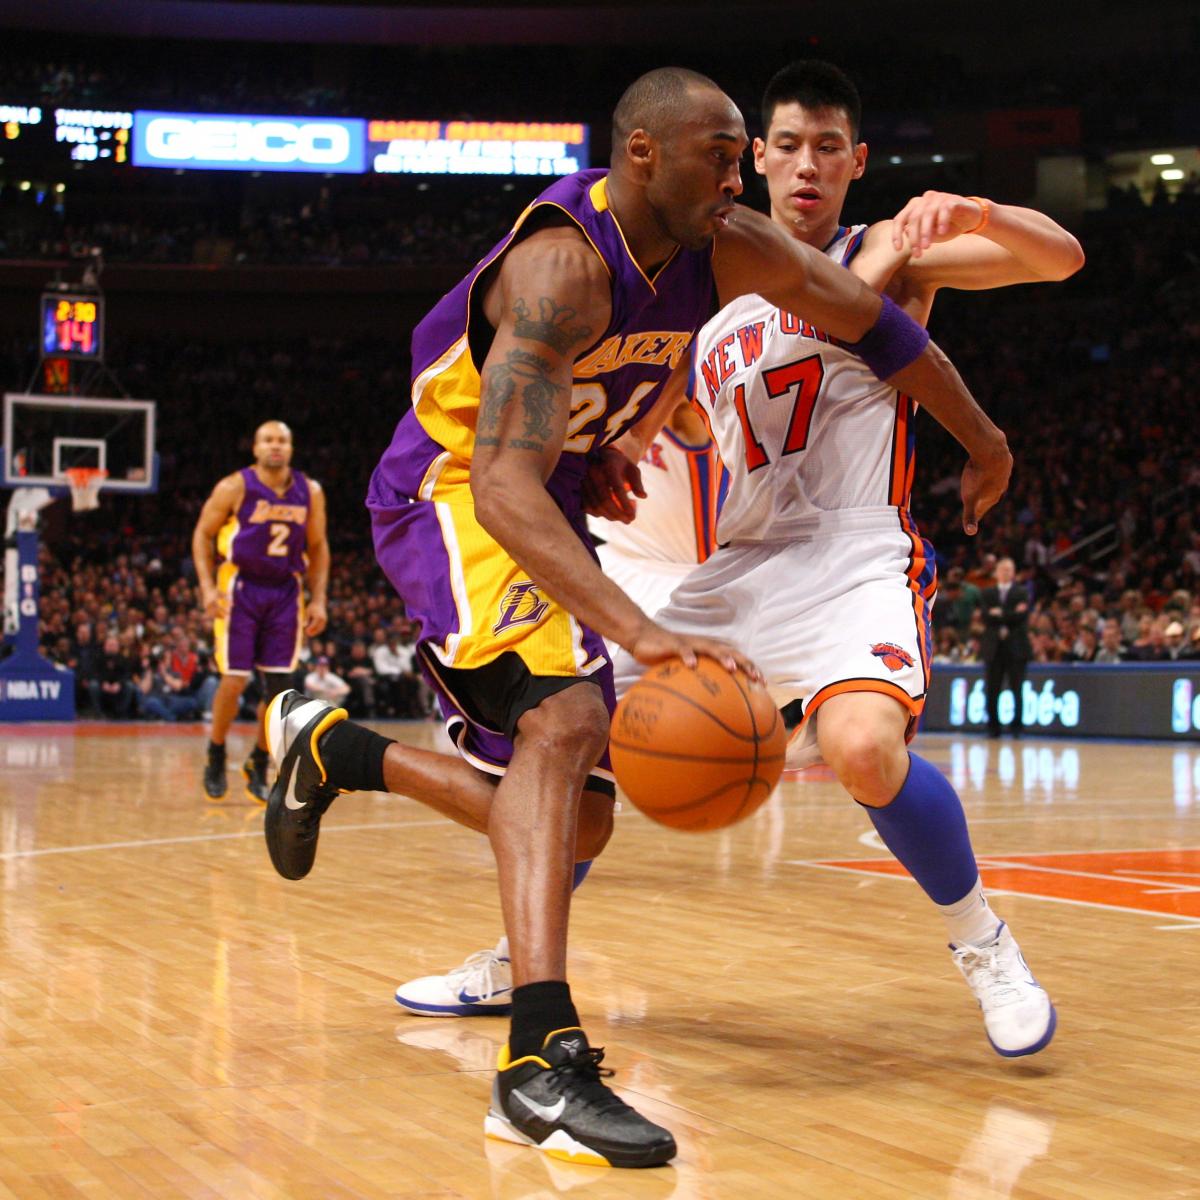 NBA Rumors: Lakers To Trade Kobe Bryant To Knicks?